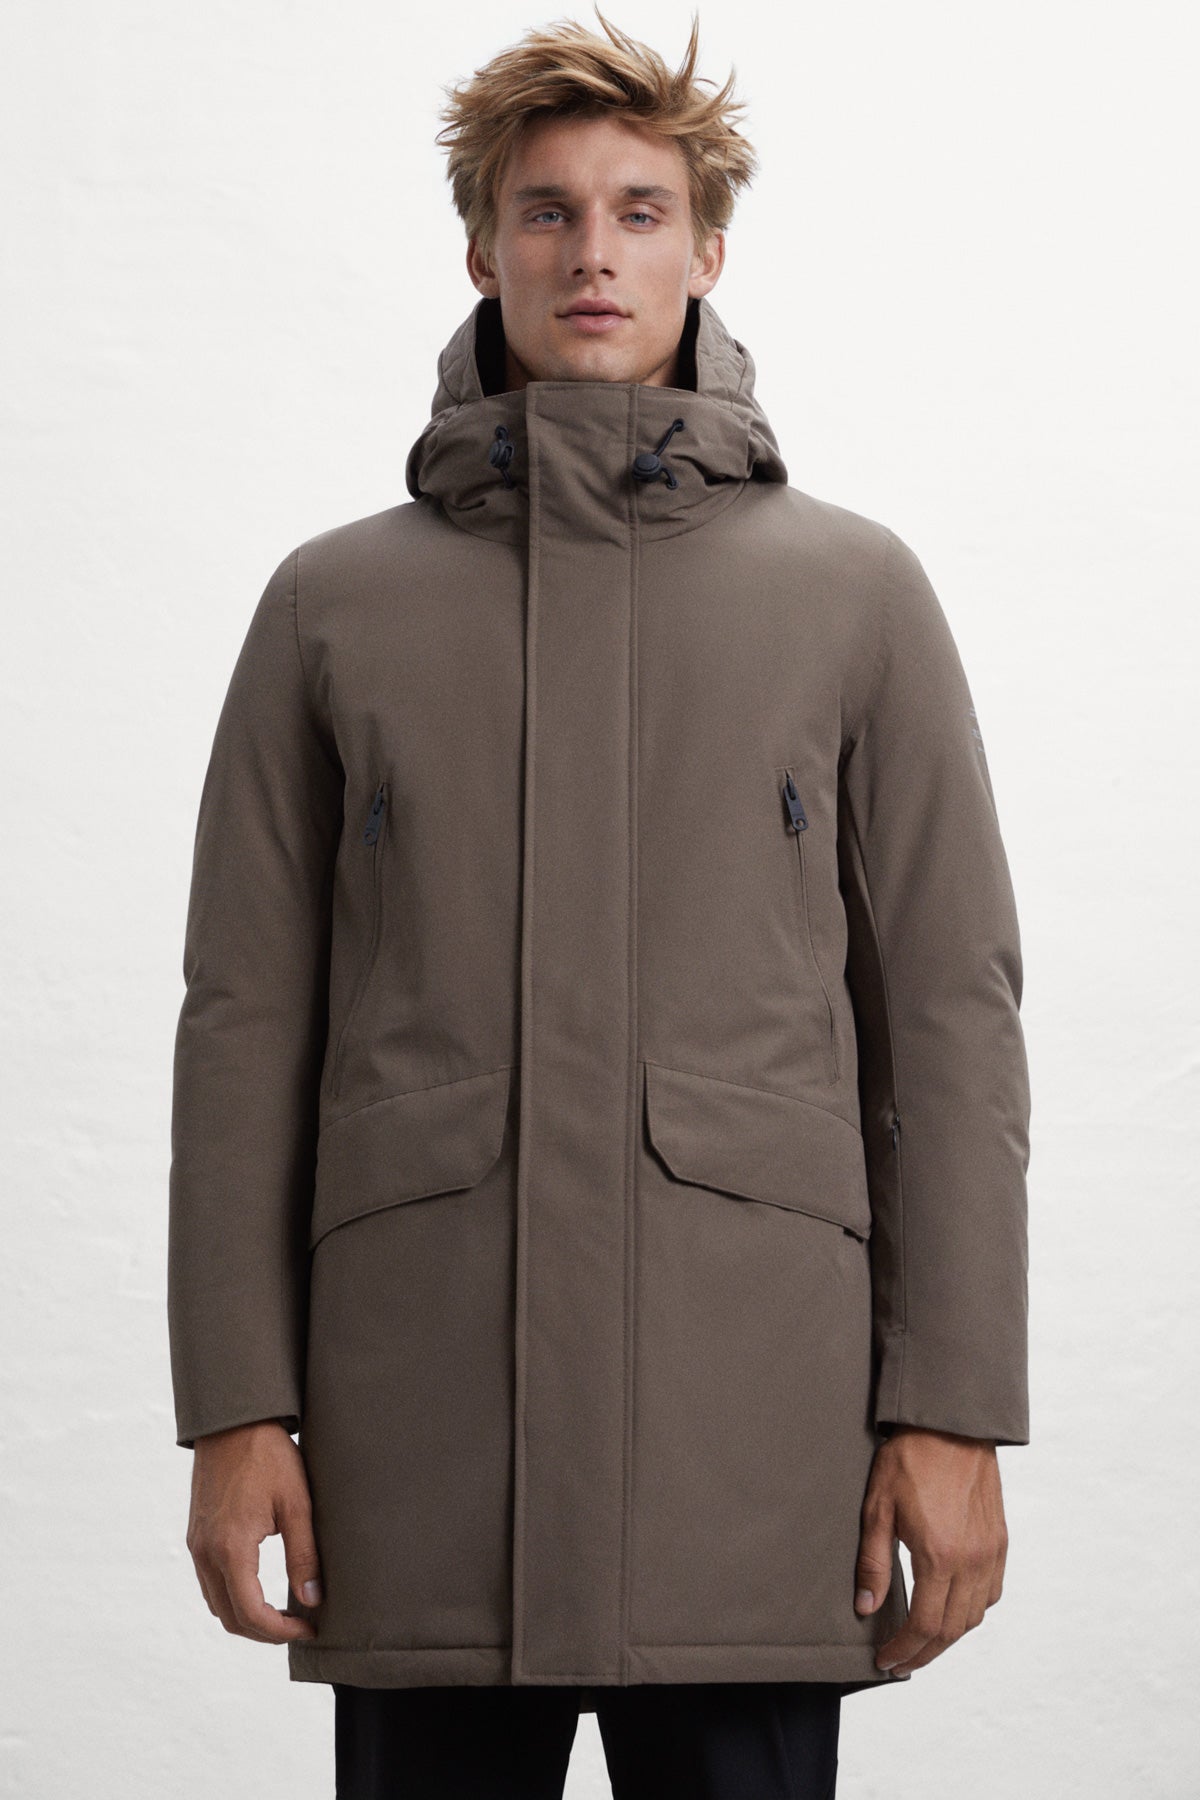 Iceberg jacket with a hood for the rain | ECOALF